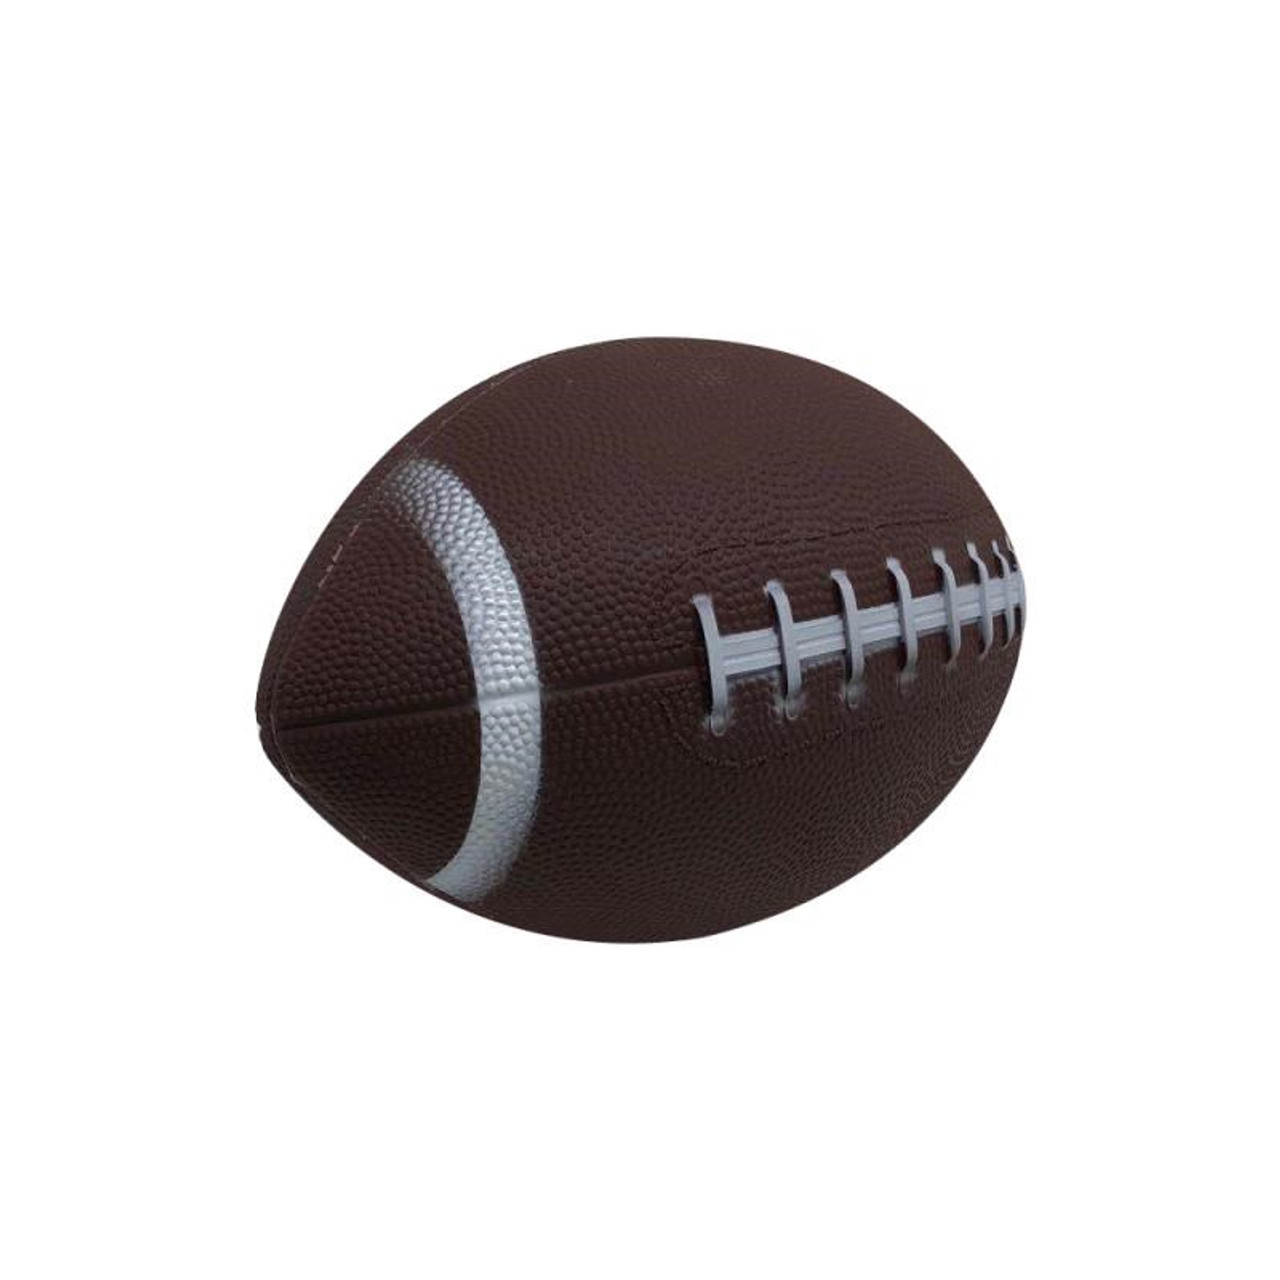 Waloo 9-Inch Mini Football with Pump product image